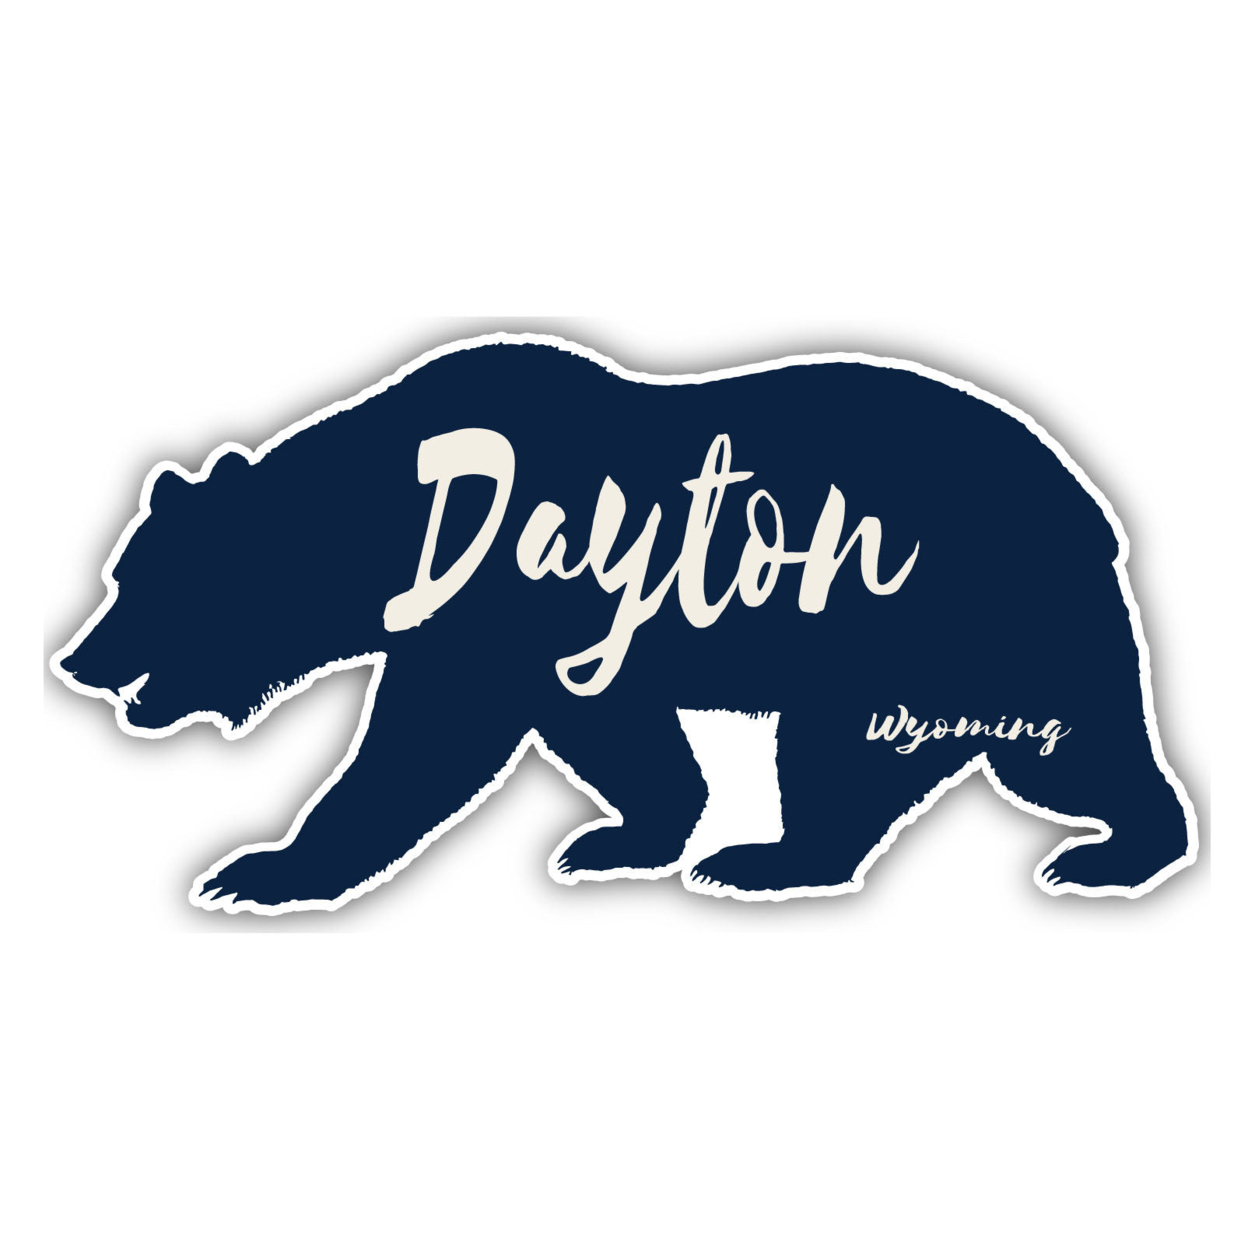 Dayton Wyoming Souvenir Decorative Stickers (Choose Theme And Size) - Single Unit, 4-Inch, Bear